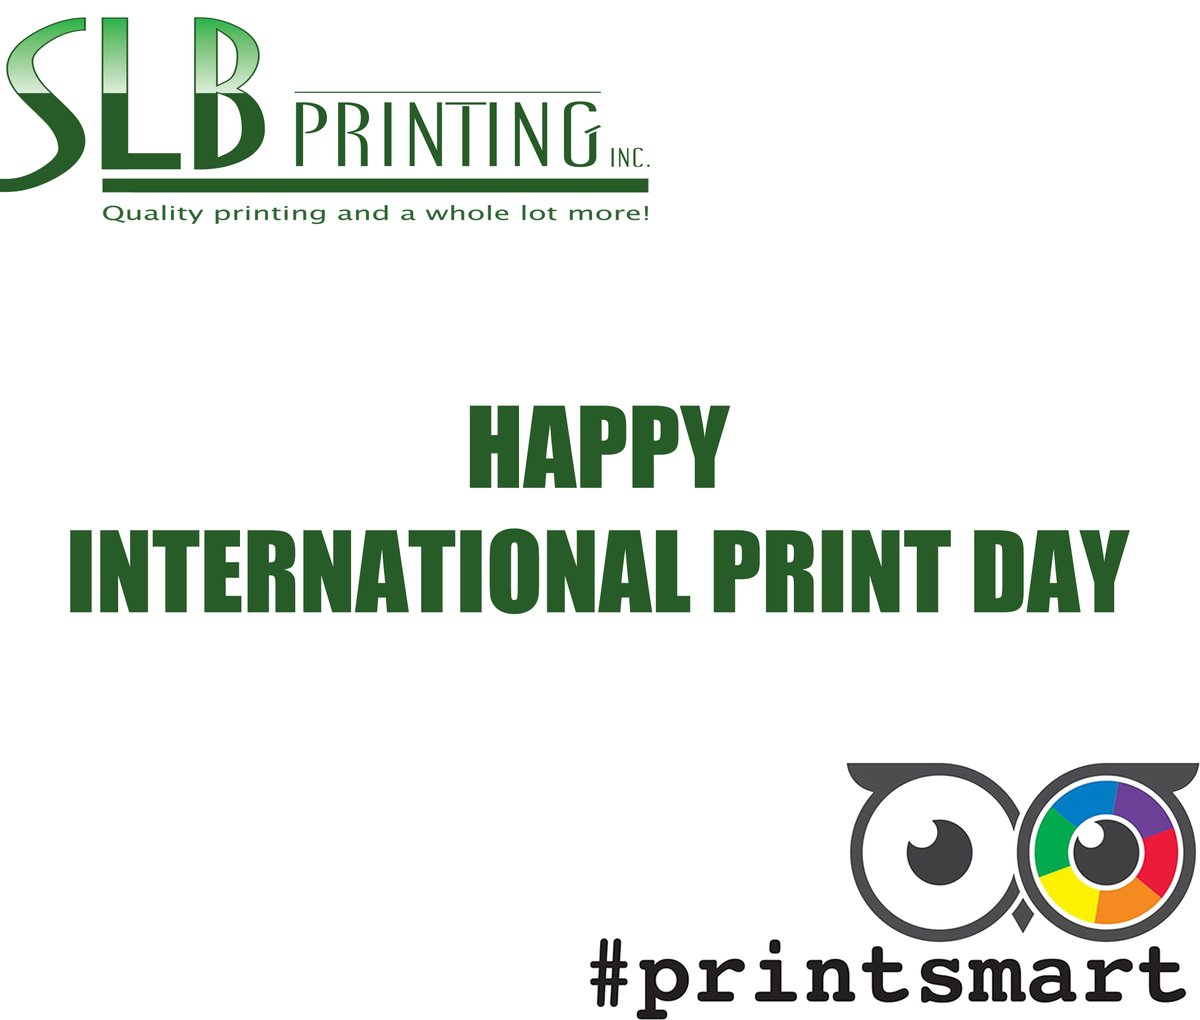 #SLBPrinting wishes everyone a happy #InternationalPrintDay #Print #IPD16 #PrintSmart